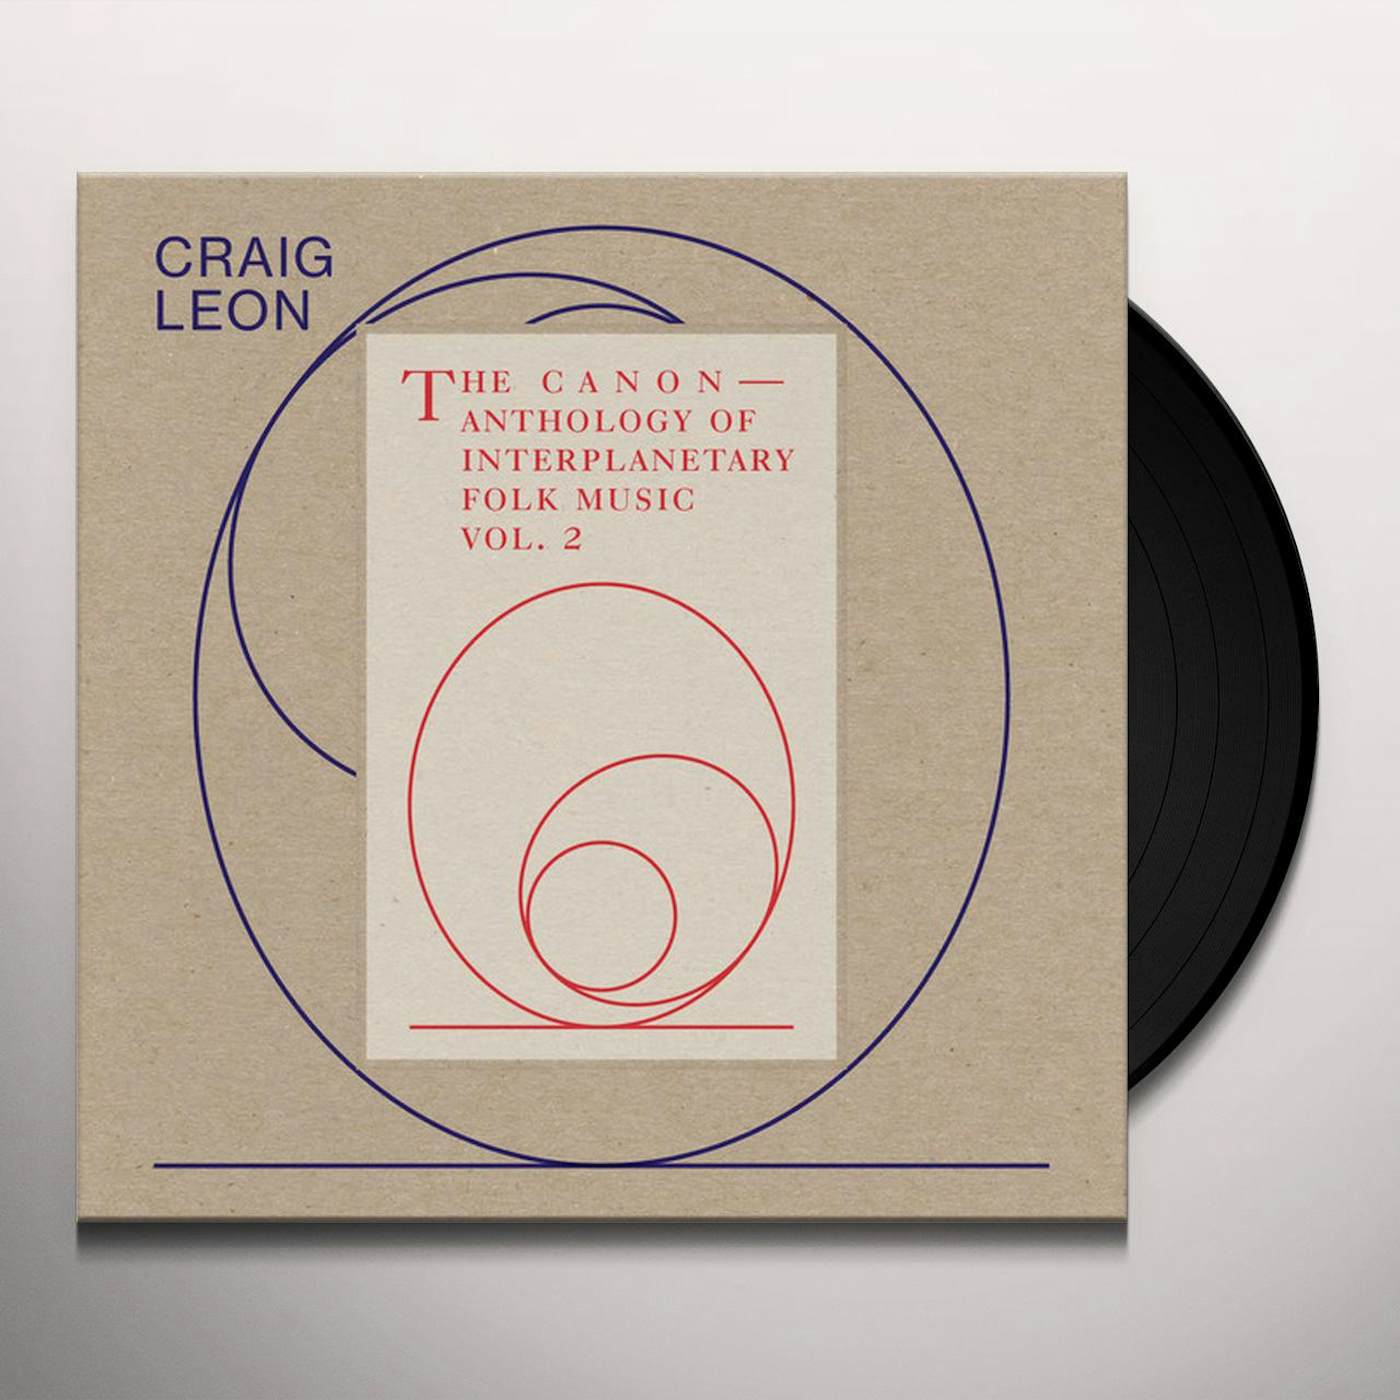 Craig Leon Anthology of Interplanetary Folk Music Vol. 2: The Canon Vinyl Record